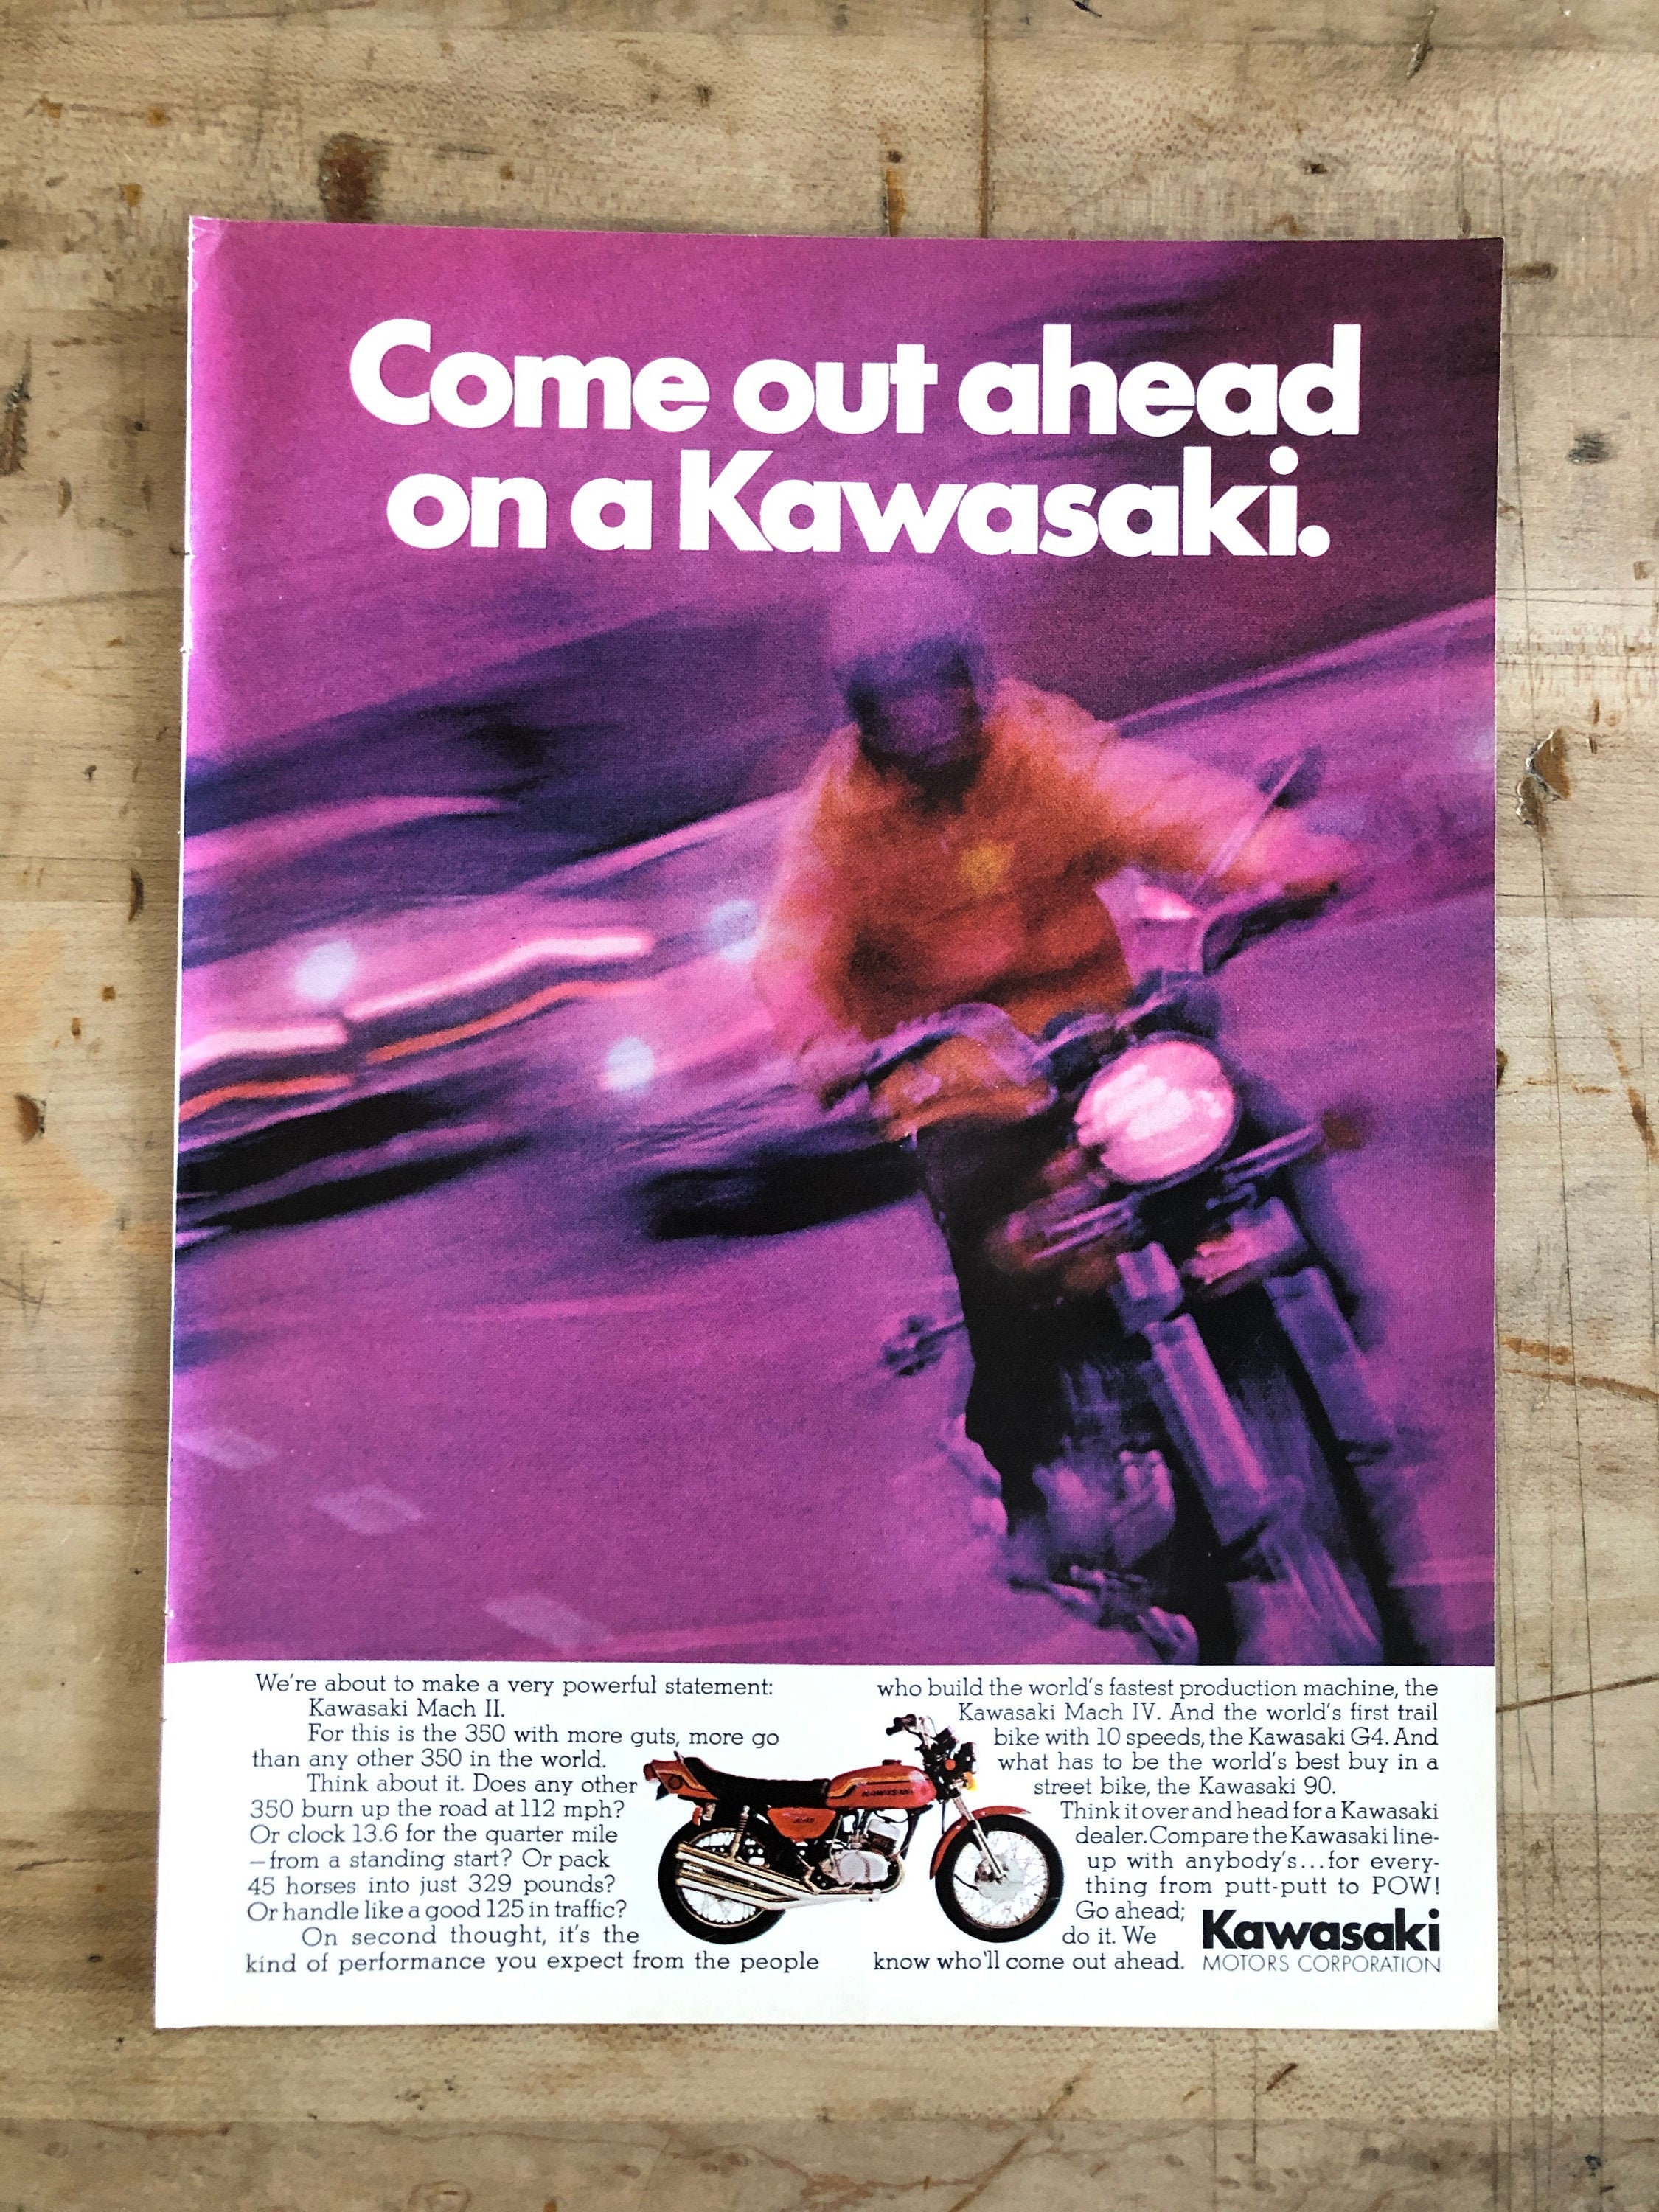 1972 Kawasaki Magazine Advert Collectibles Advertisements Art